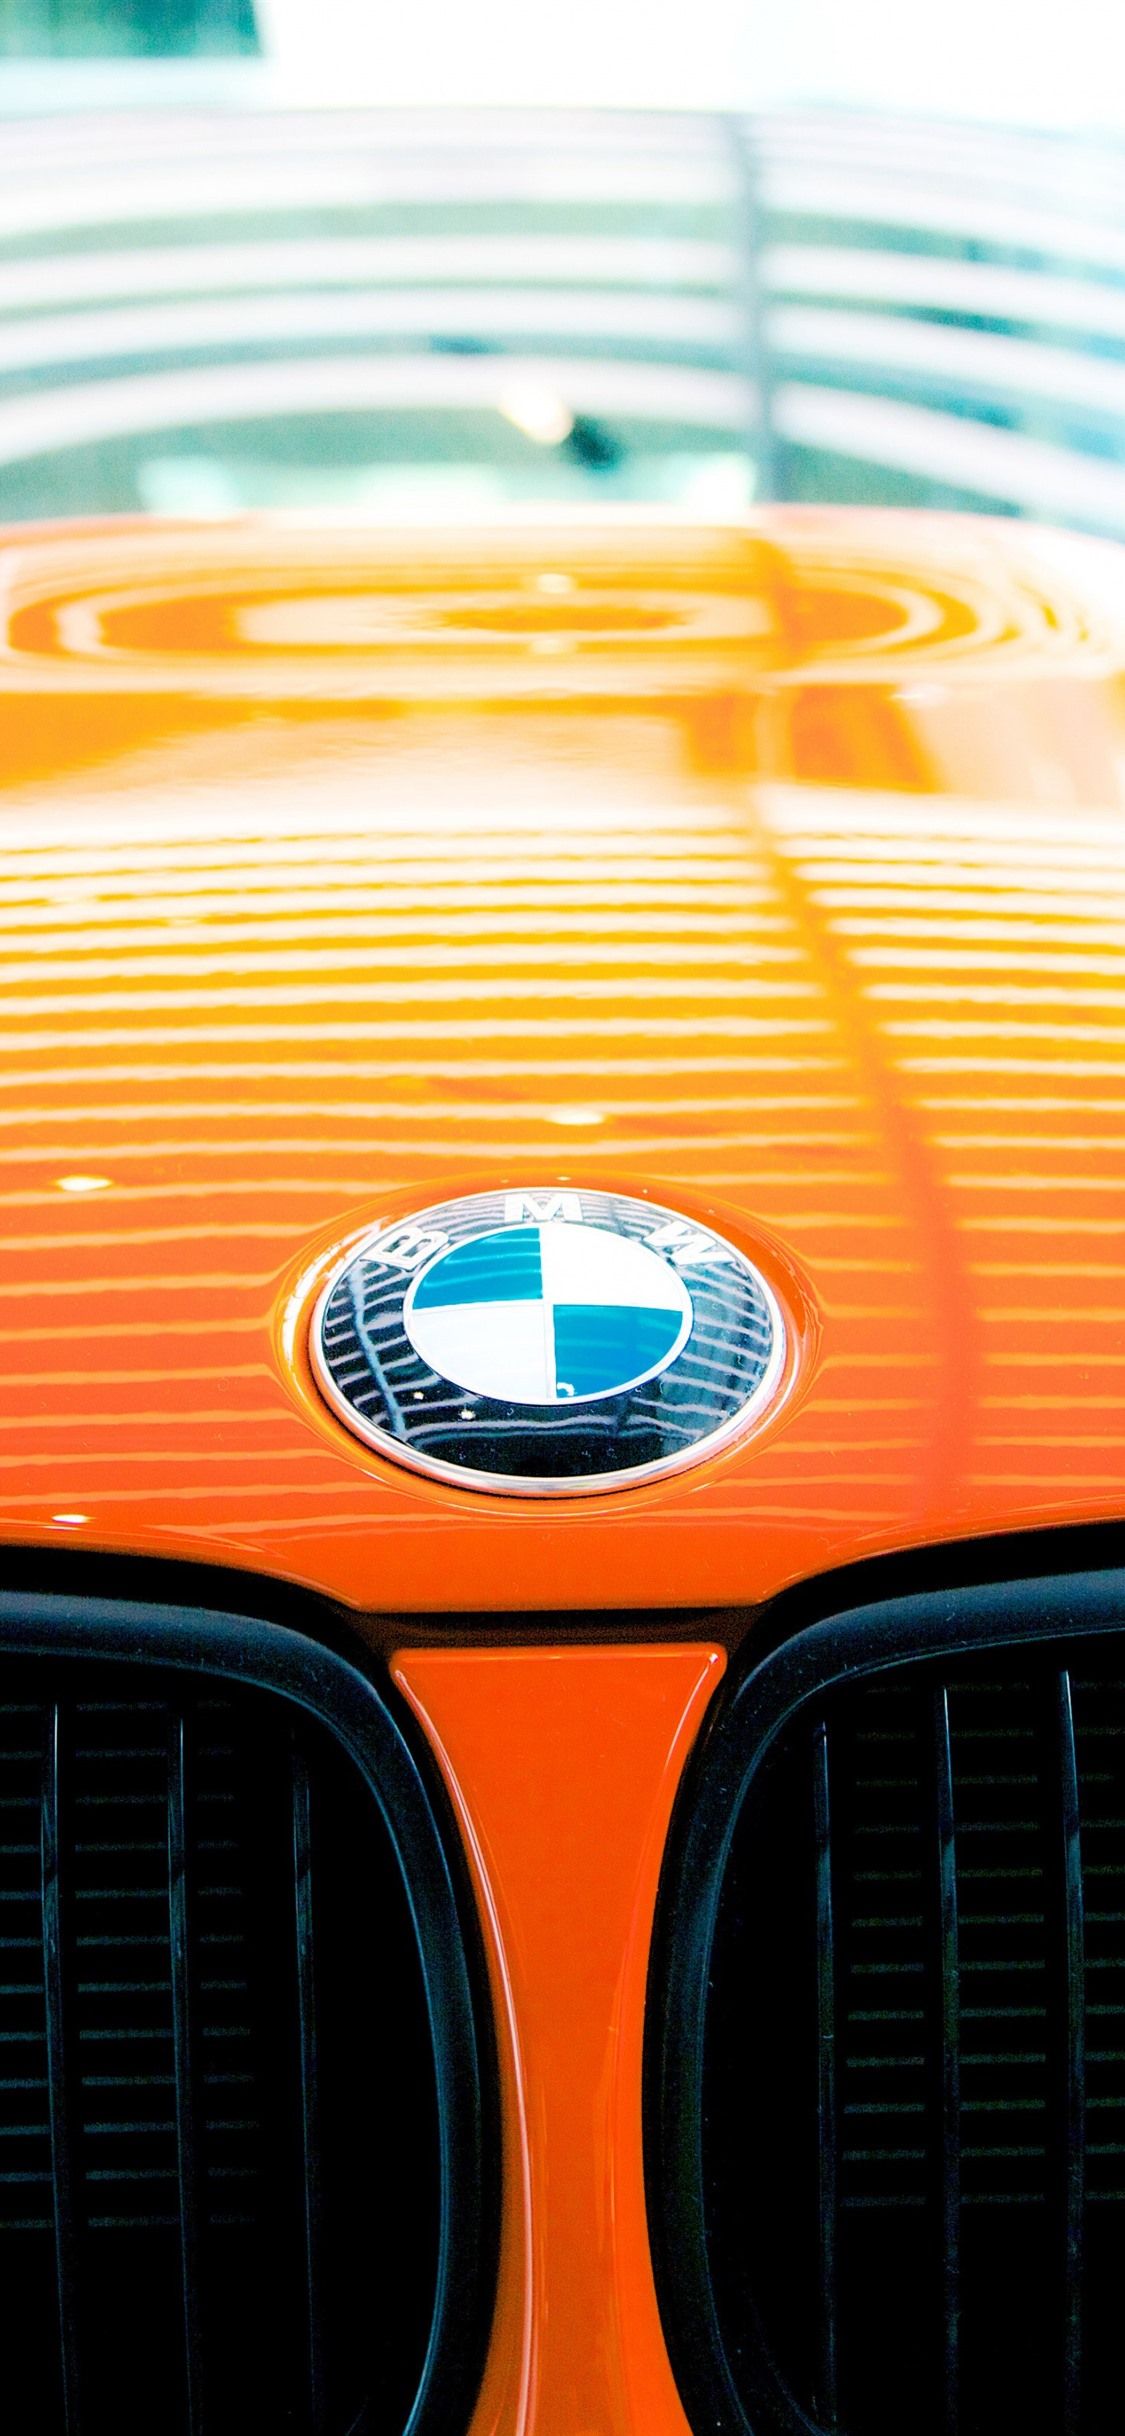  BMW Hintergrundbild 1125x2436. BMW Logo, orangefarbenes Auto 5120x2880 UHD 5K Hintergrundbilder, HD, Bild